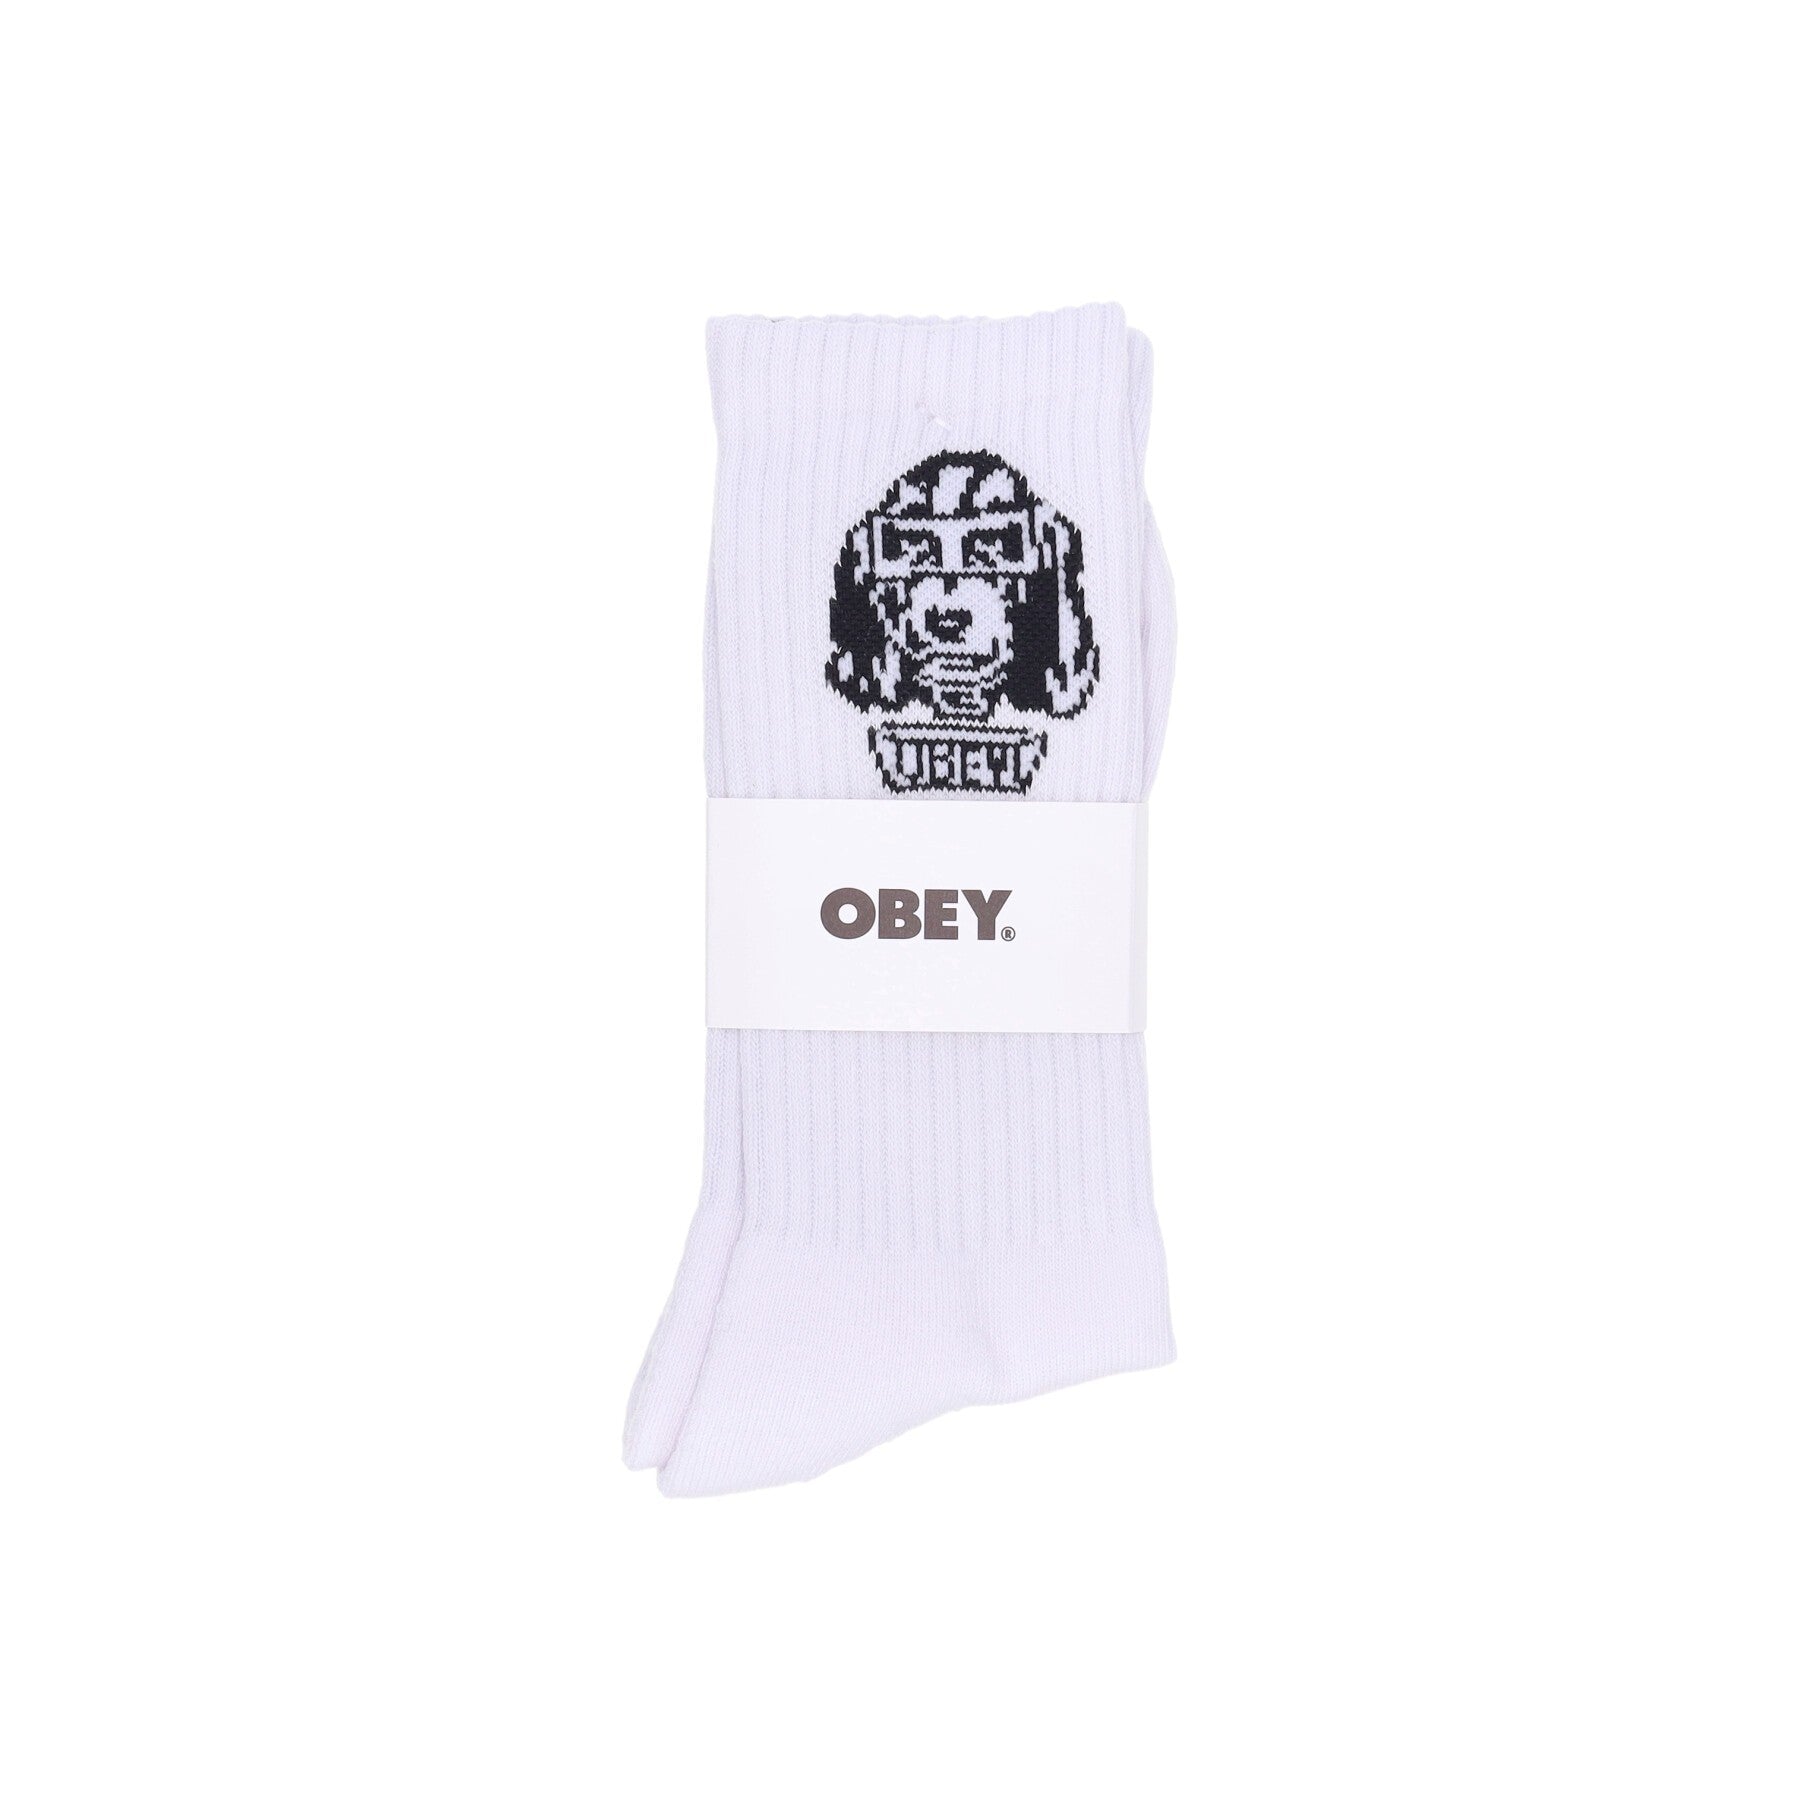 Obey, Calza Media Uomo Dog Socks, White